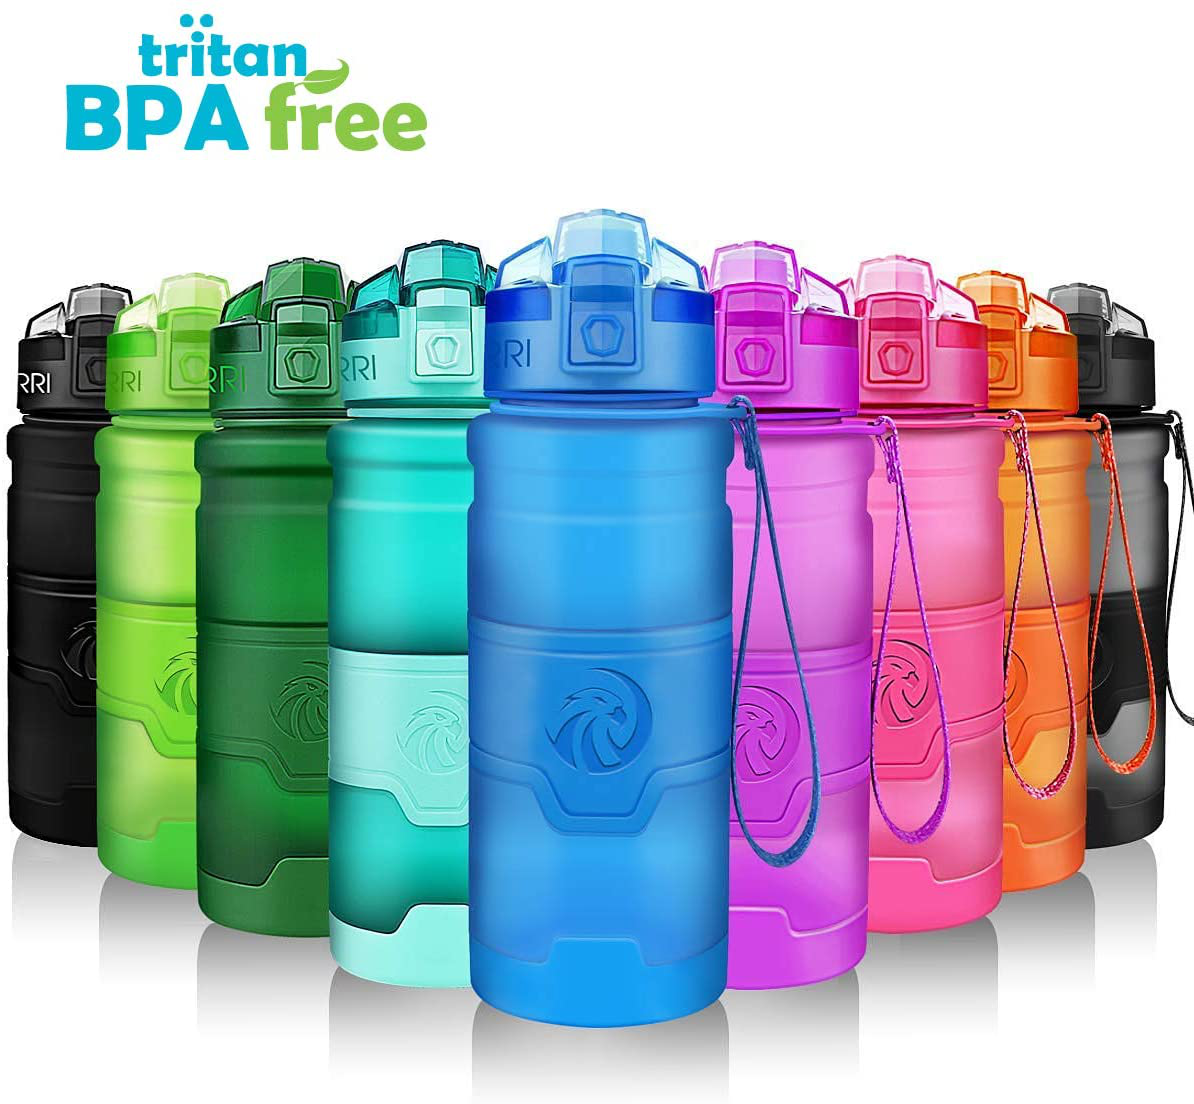 ZORRI Sports Water Bottle, 400/500/700ml/1L, BPA Free Leak Proof Tritan Lightweight Bottles for Outdoors,Camping,Cycling,Fitness,Gym,Yoga- Kids/Adults Drink Bottles with Filter, Lockable Pop Open Lid